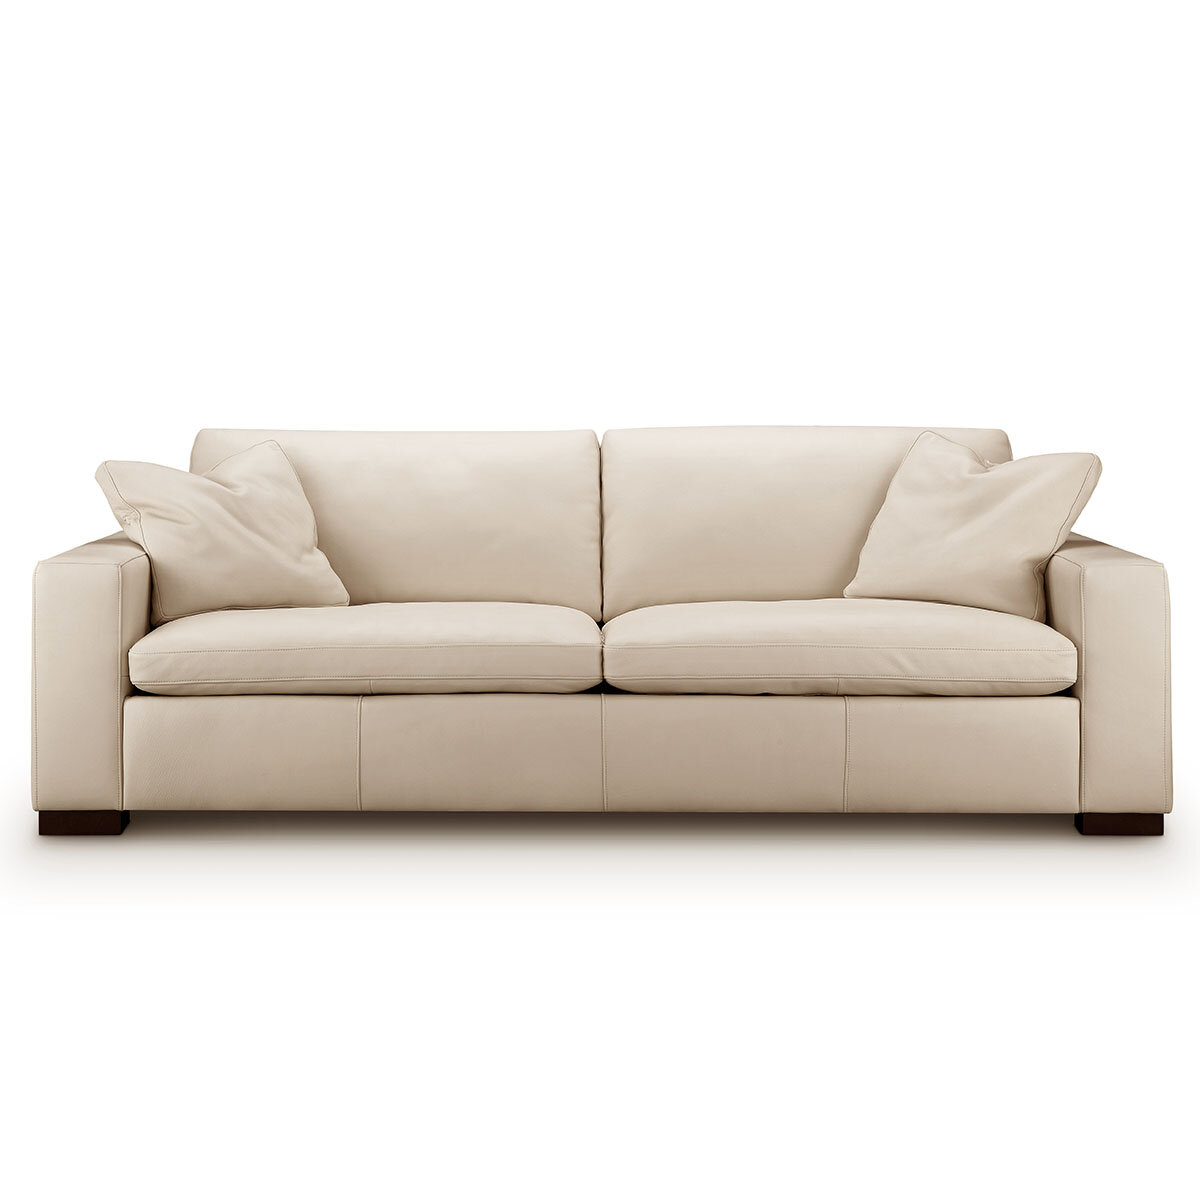 Kalona Genoa Three Seater Leather Sofa, Leather Couch Cream